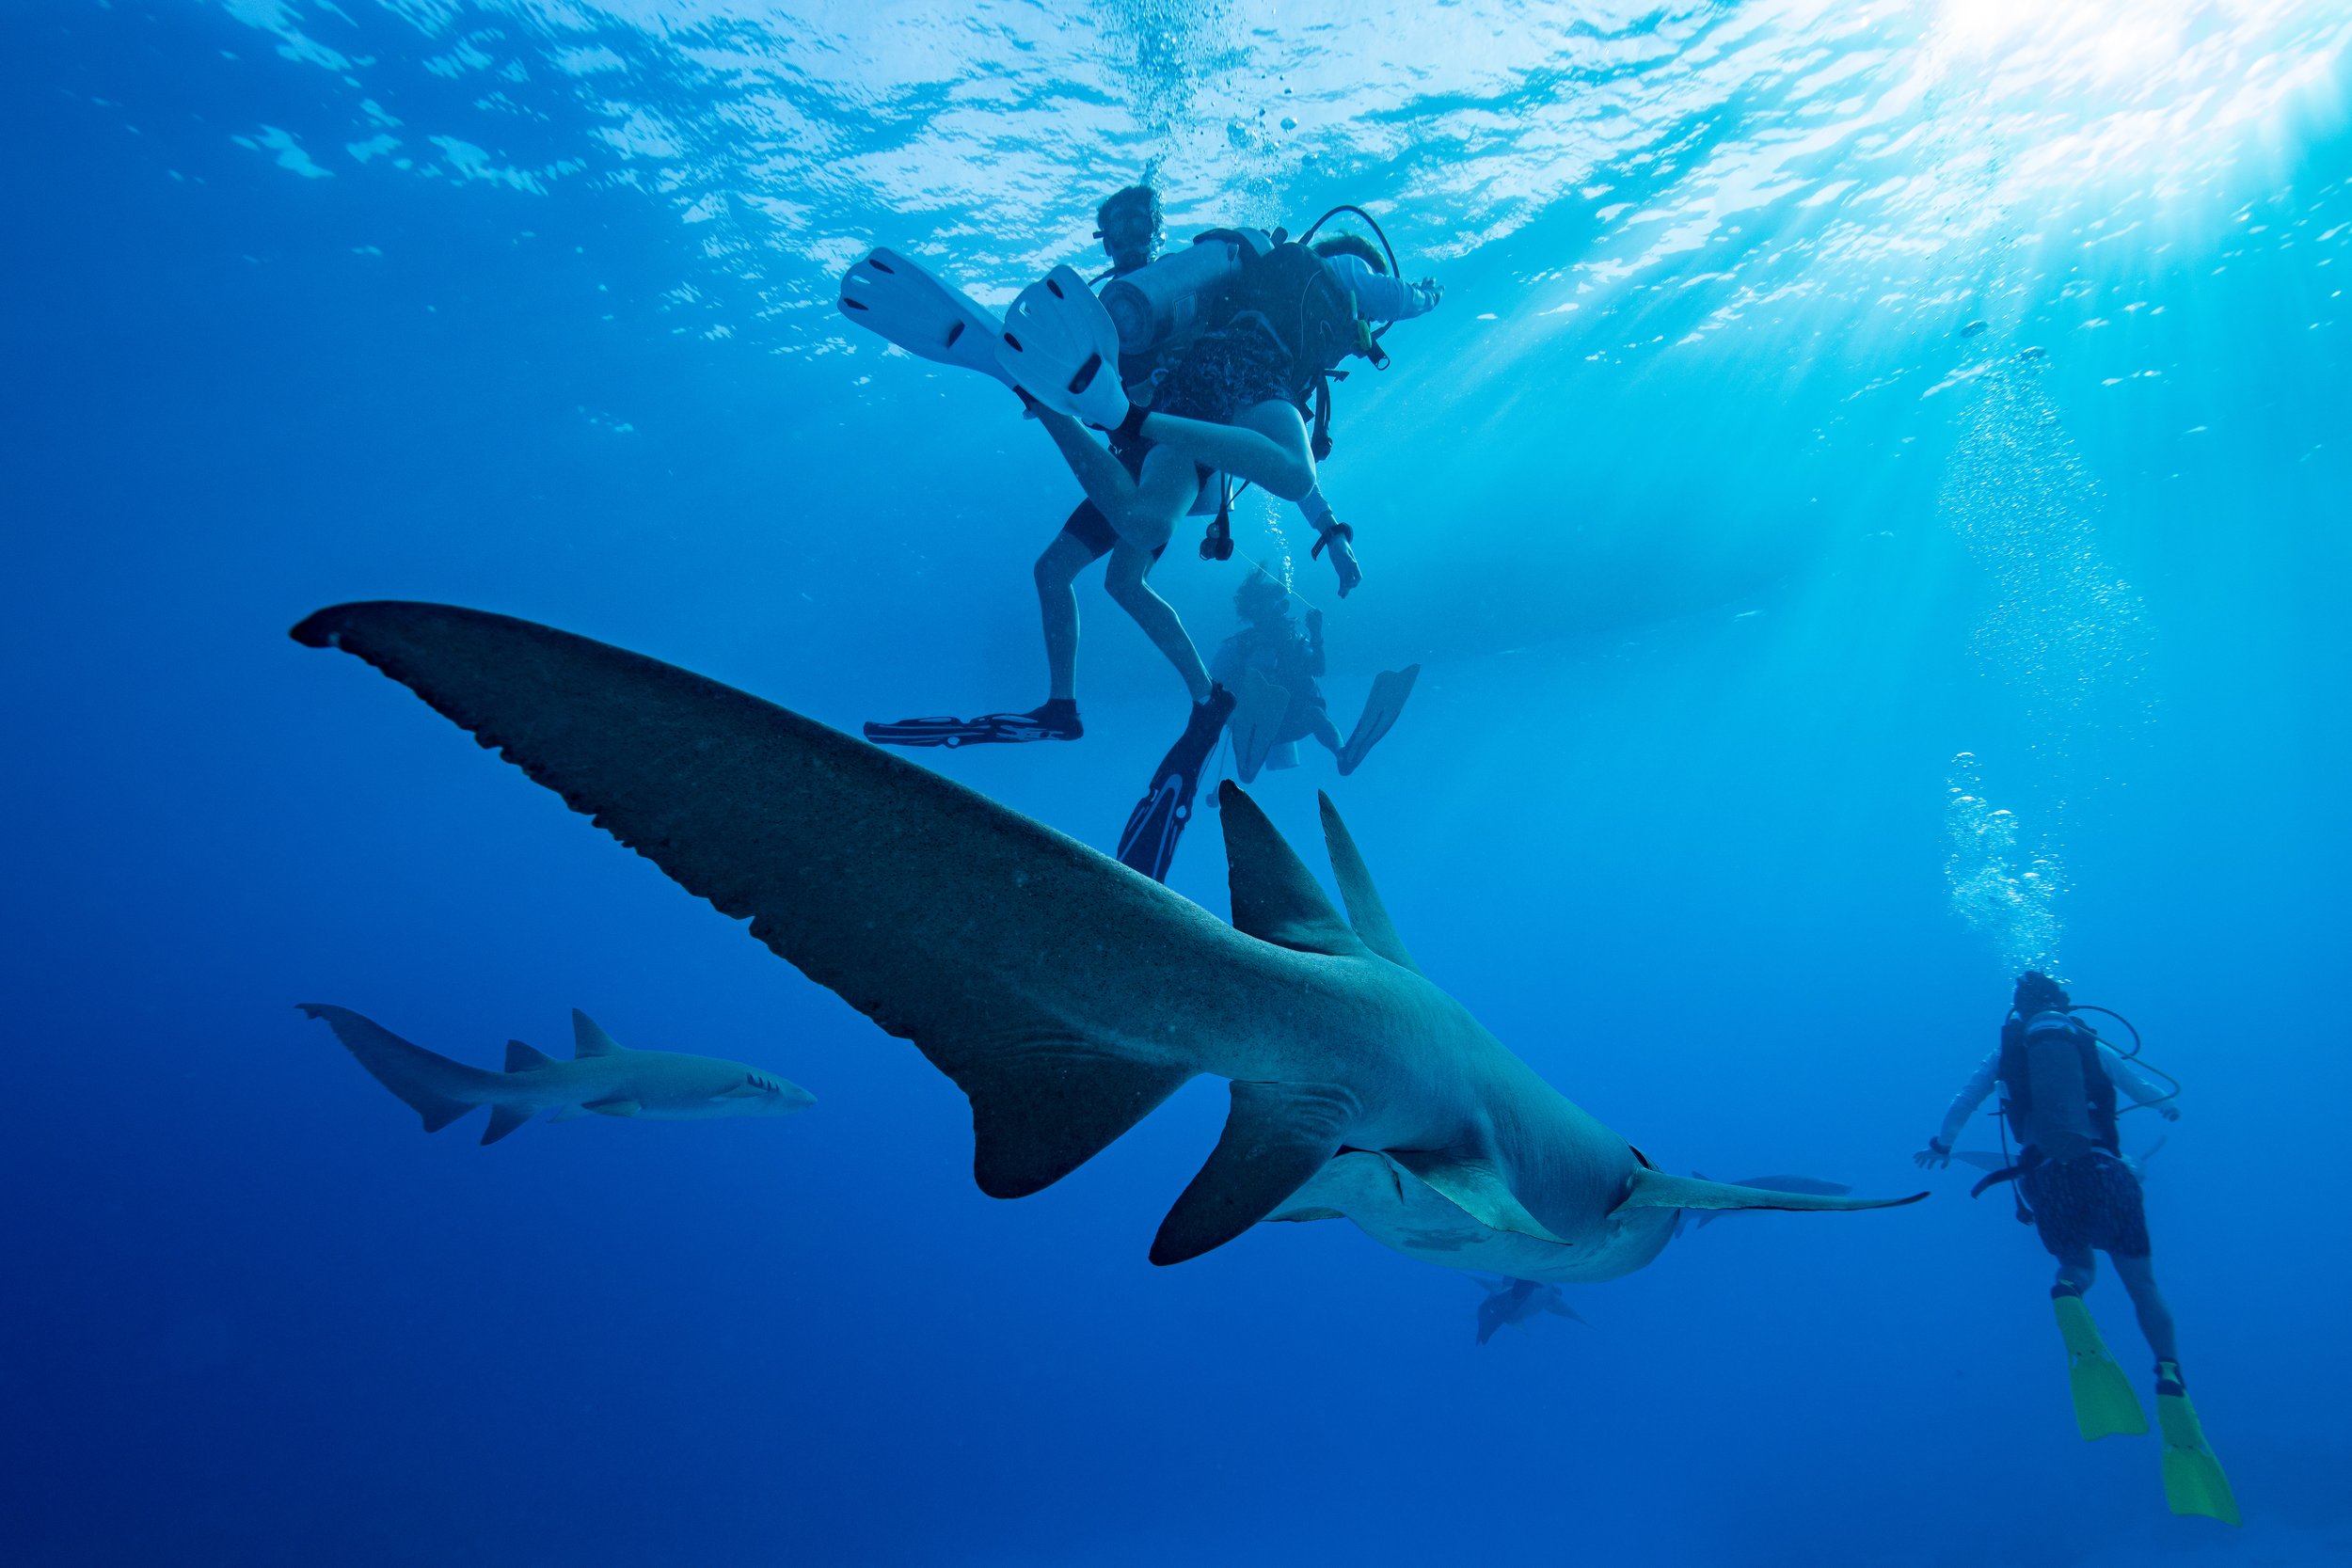   Maldives,   2022 -  Seren and friends scuba diving among docile sharks.  